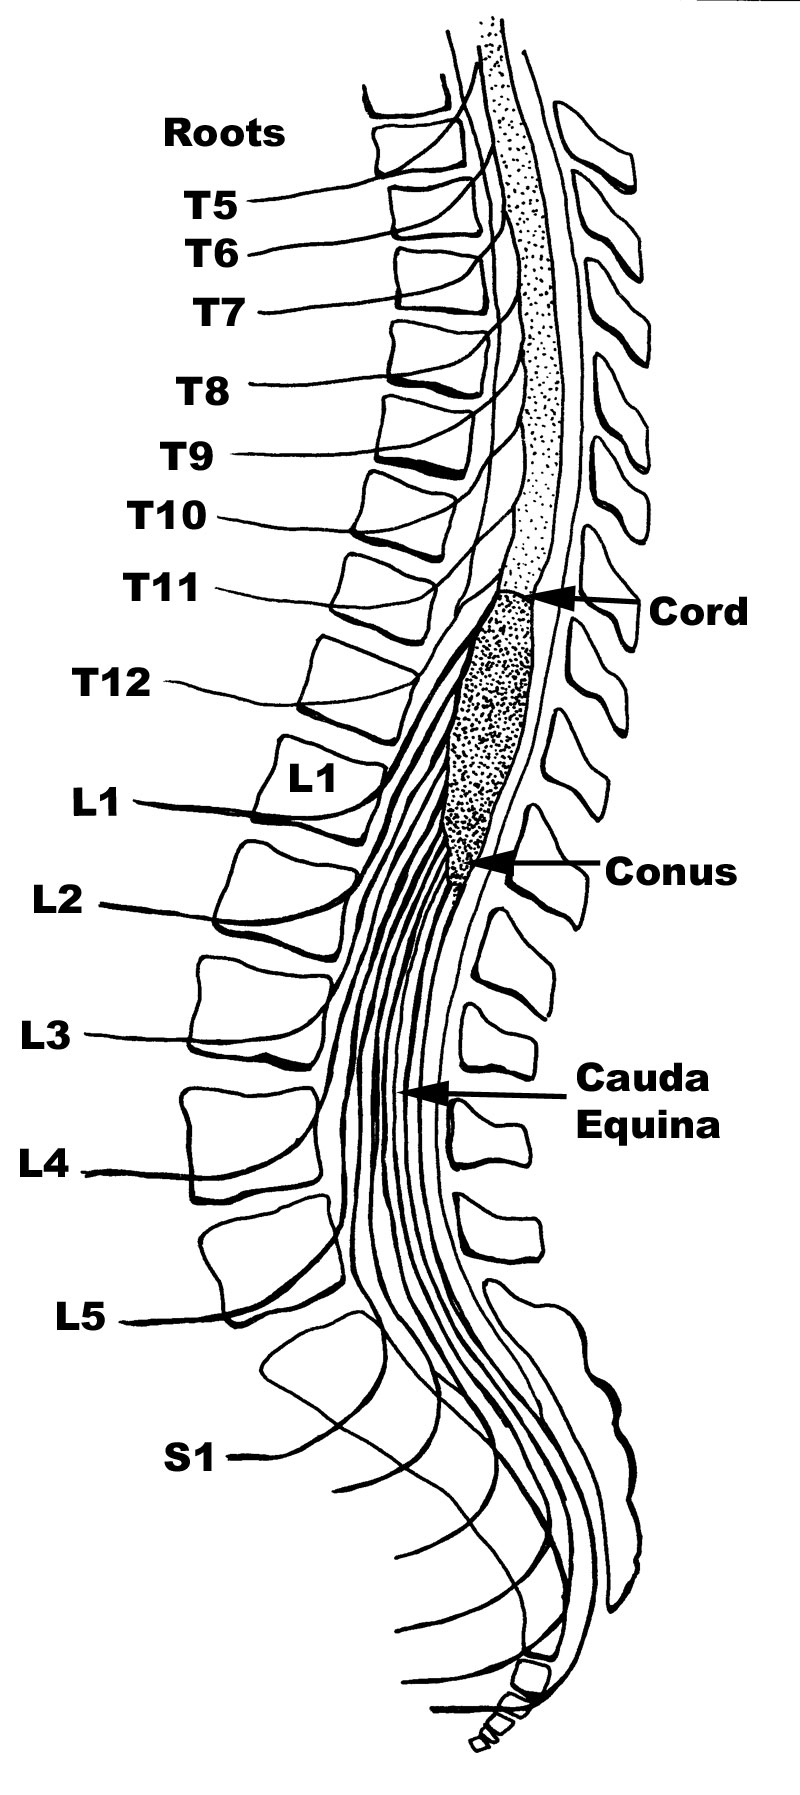 Cauda Equina Anatomy